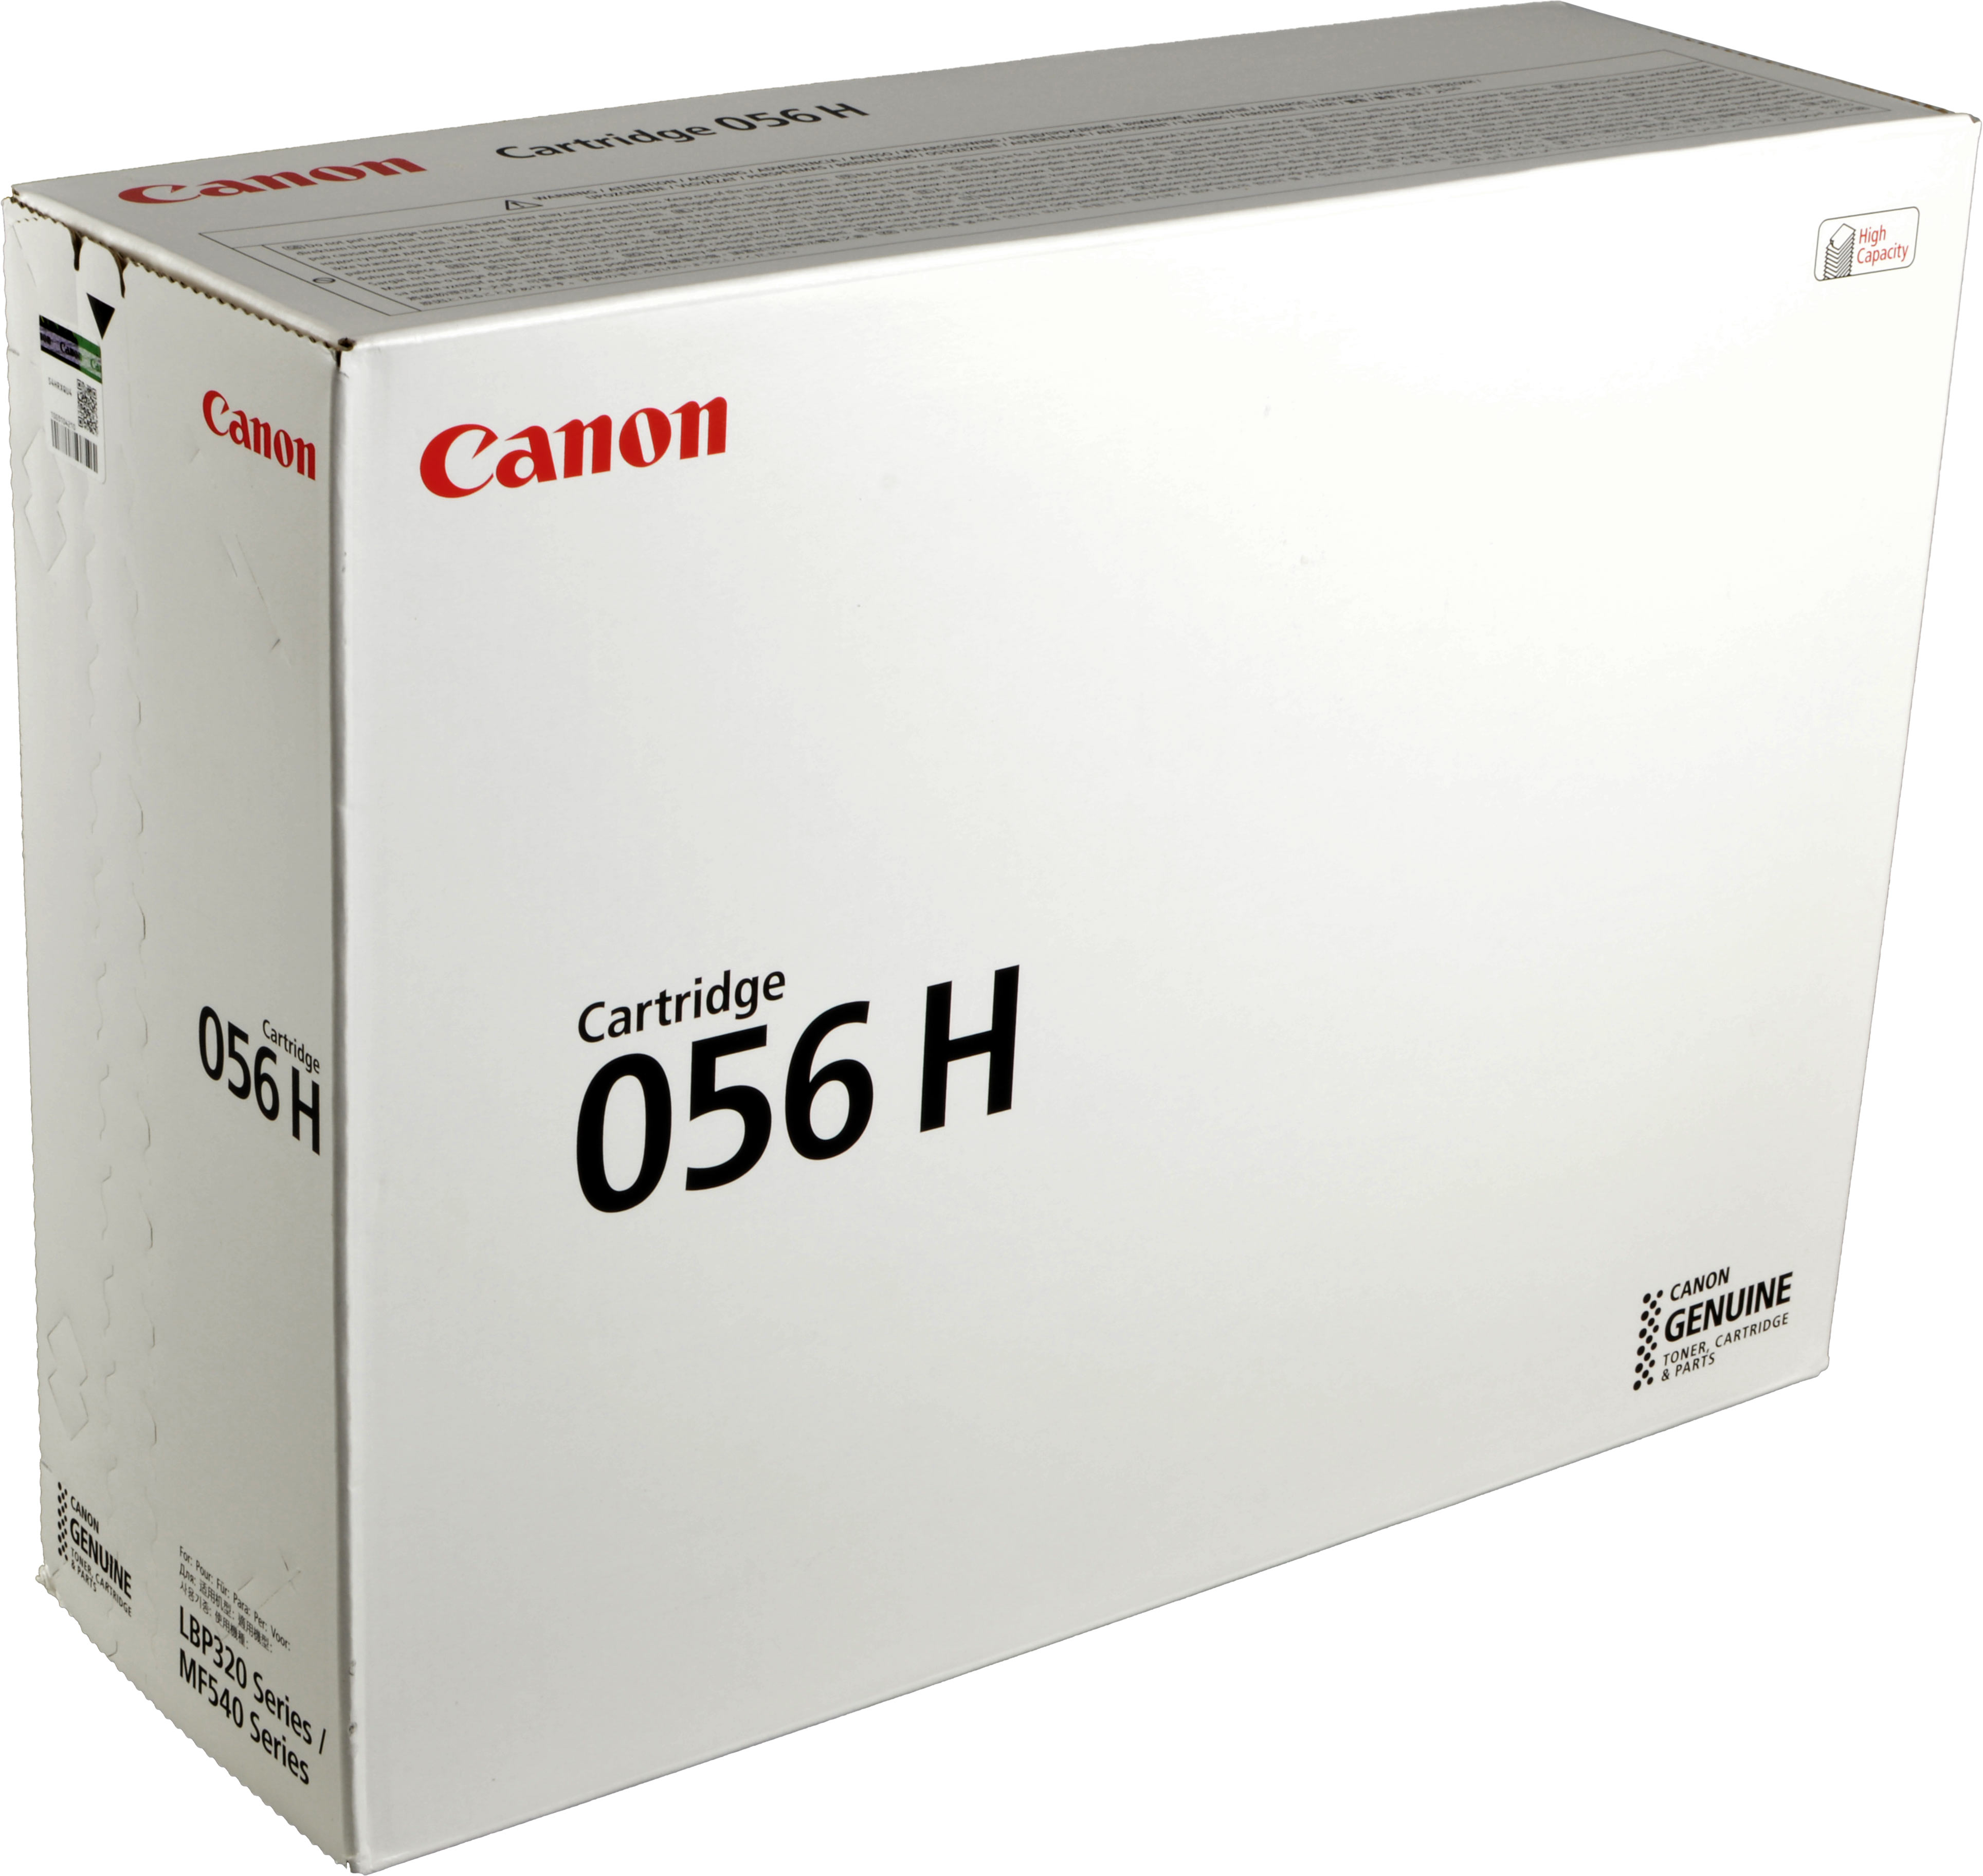 Canon Toner 3008C002  056H  schwarz